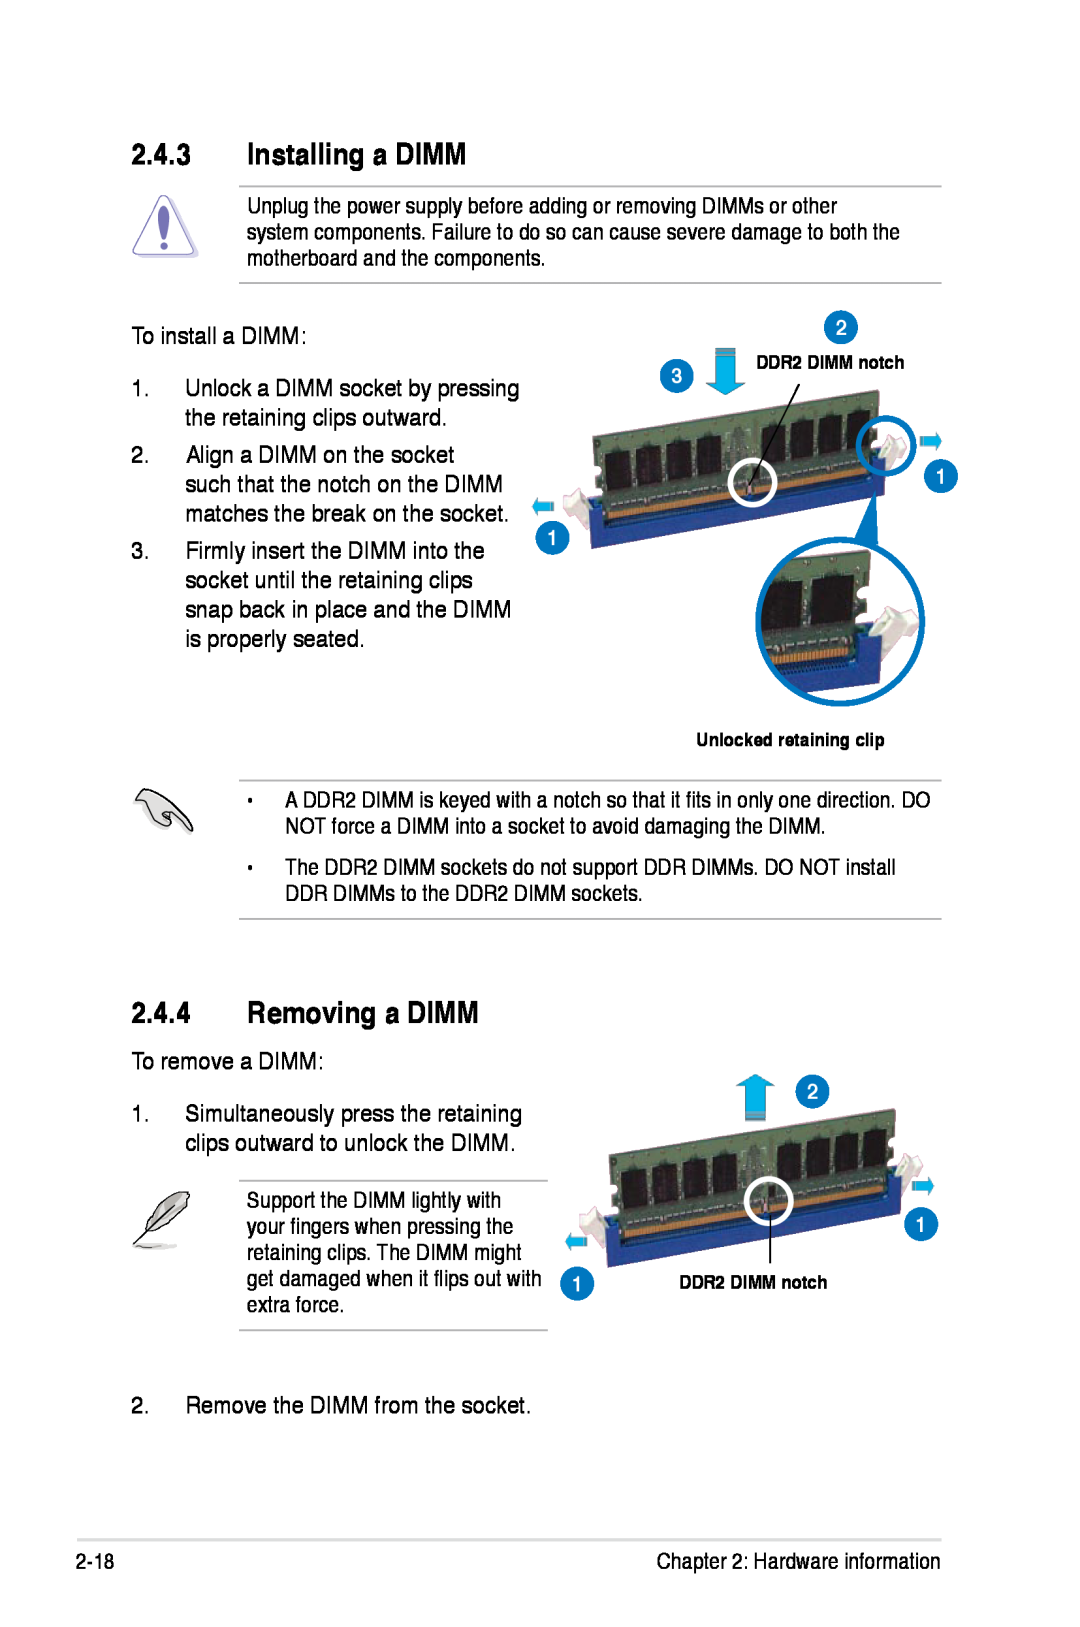 Asus P5K/EPU manual Installing a DIMM, Removing a DIMM, To install a DIMM, Unlock a DIMM socket by pressing 